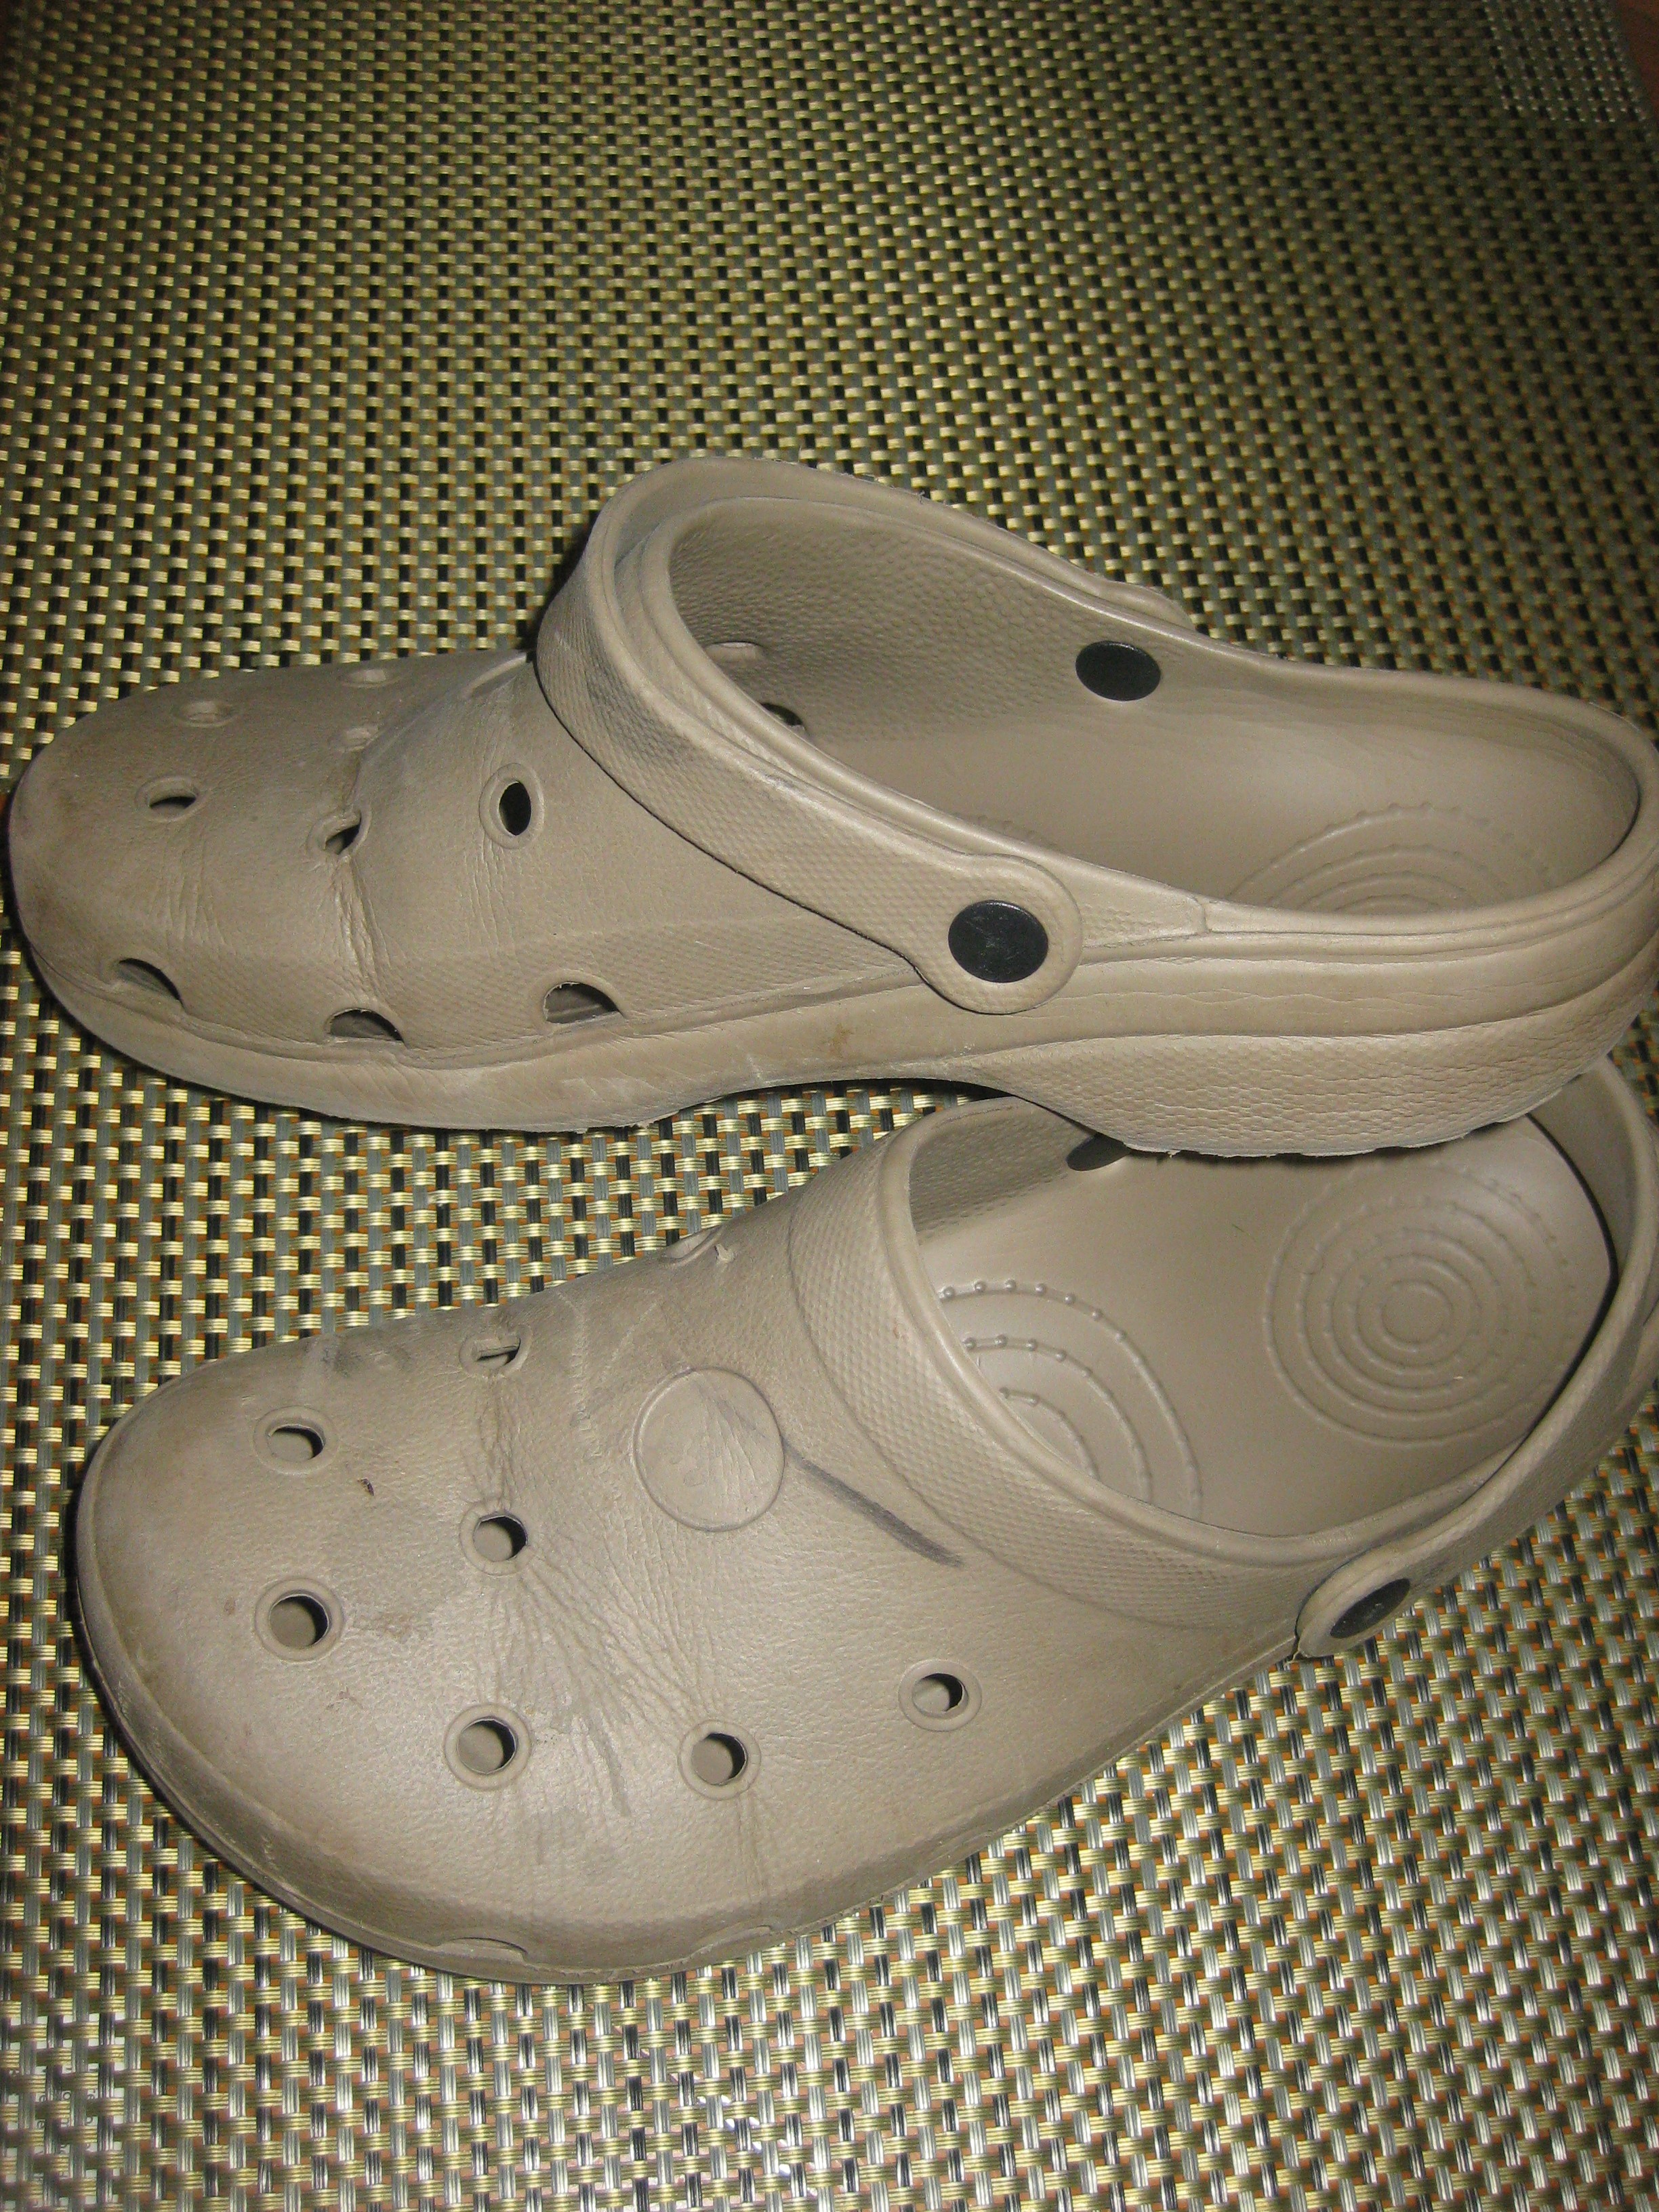 crocs imitation shoes